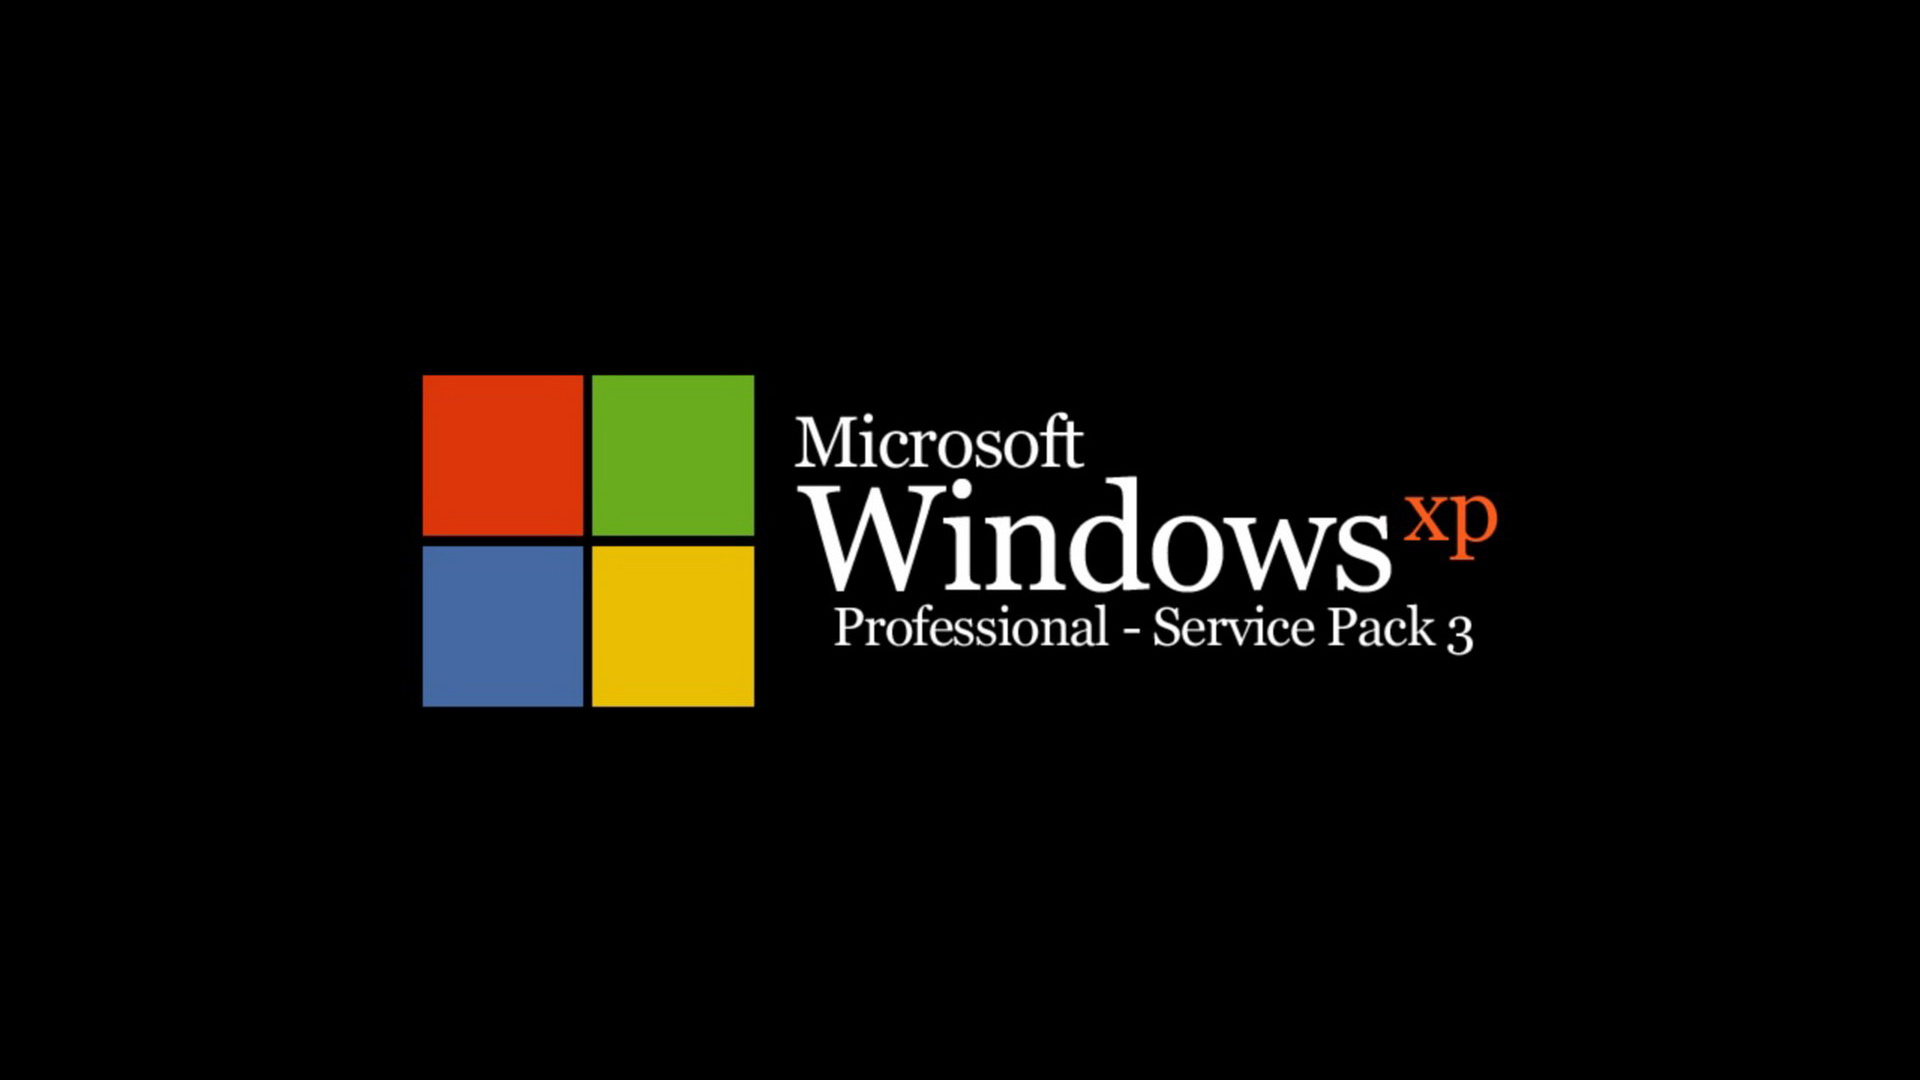 Windows Xp, Microsoft Windows, 文本, 图形设计, 品牌 壁纸 1920x1080 允许